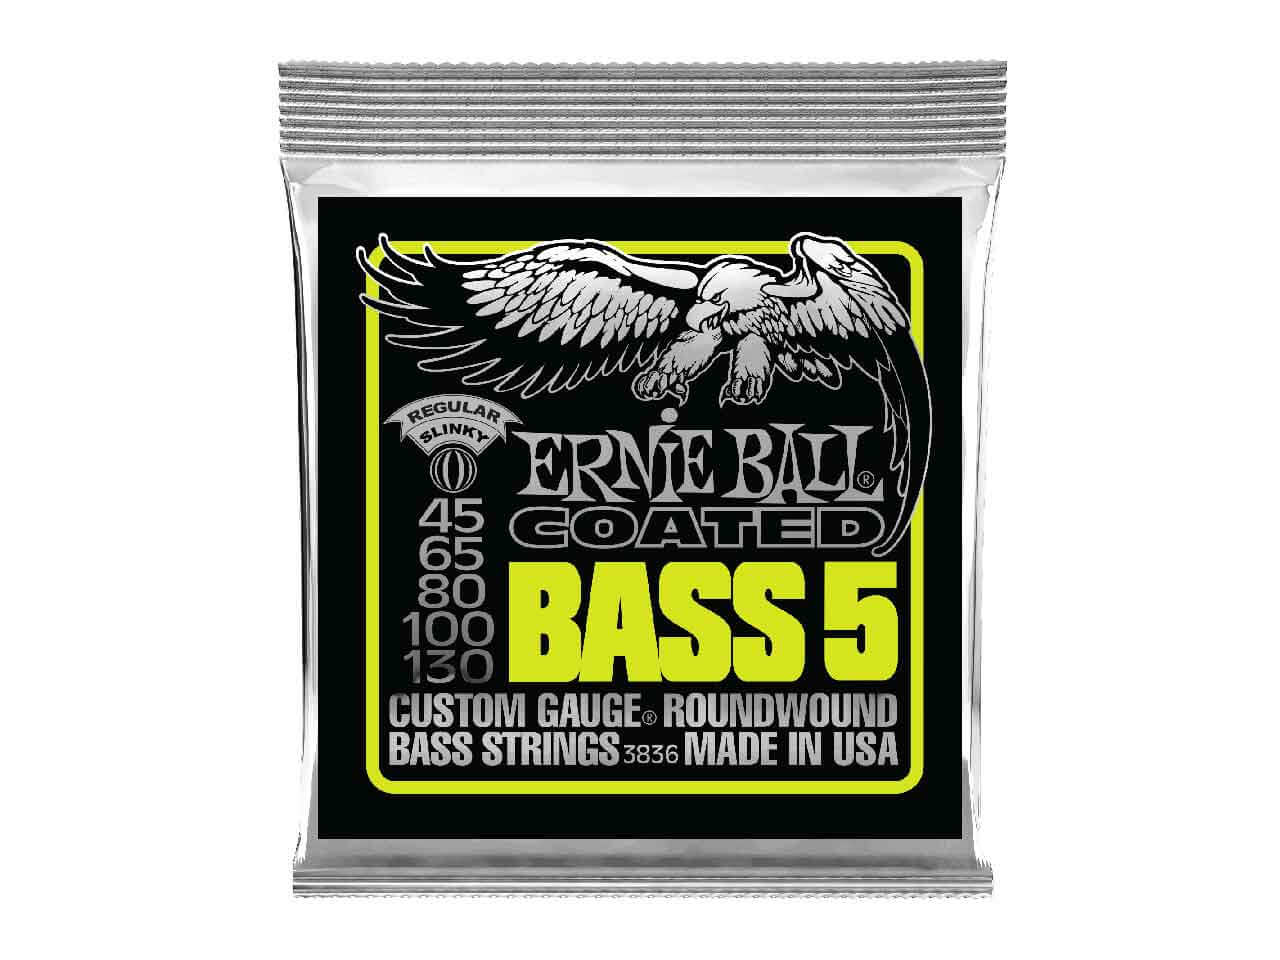 ERNiE BALL(アーニーボール) Coated Regular Slinky Bass 5 / 45-130 #3836 (エレキベース弦/5弦用)